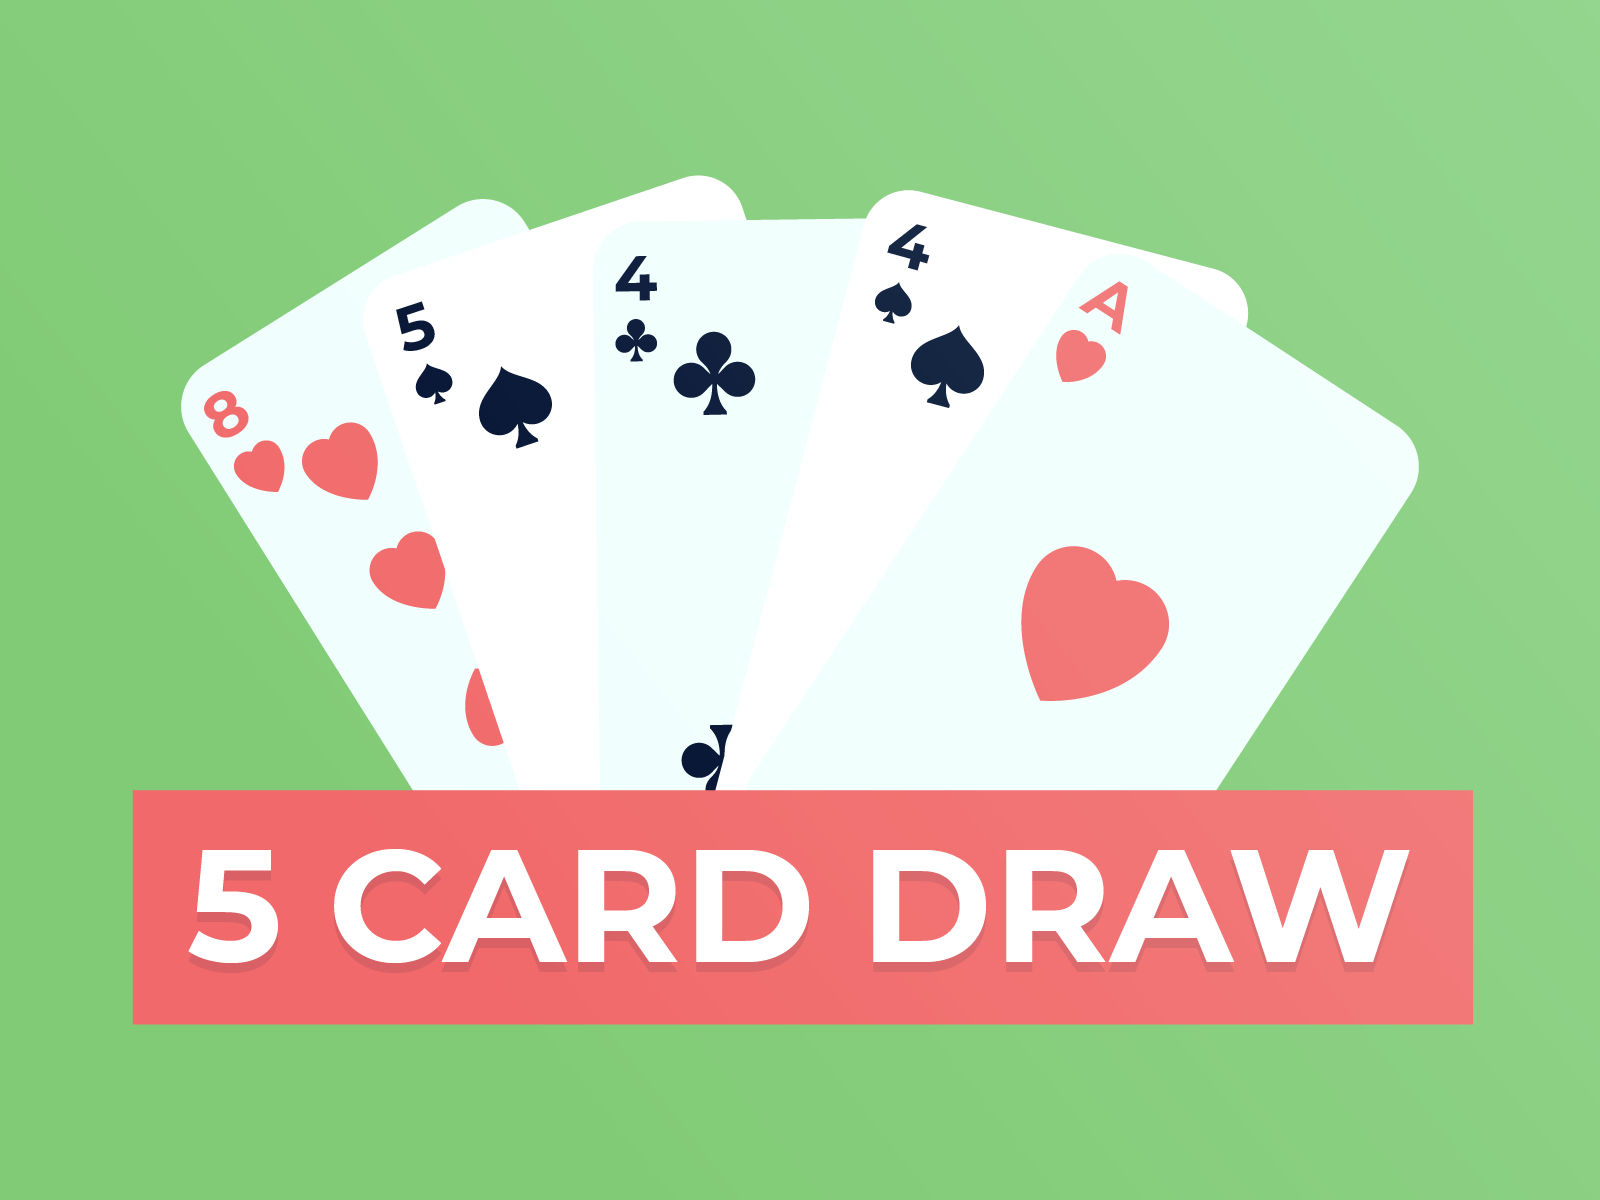 5 card draw poker rules pdf